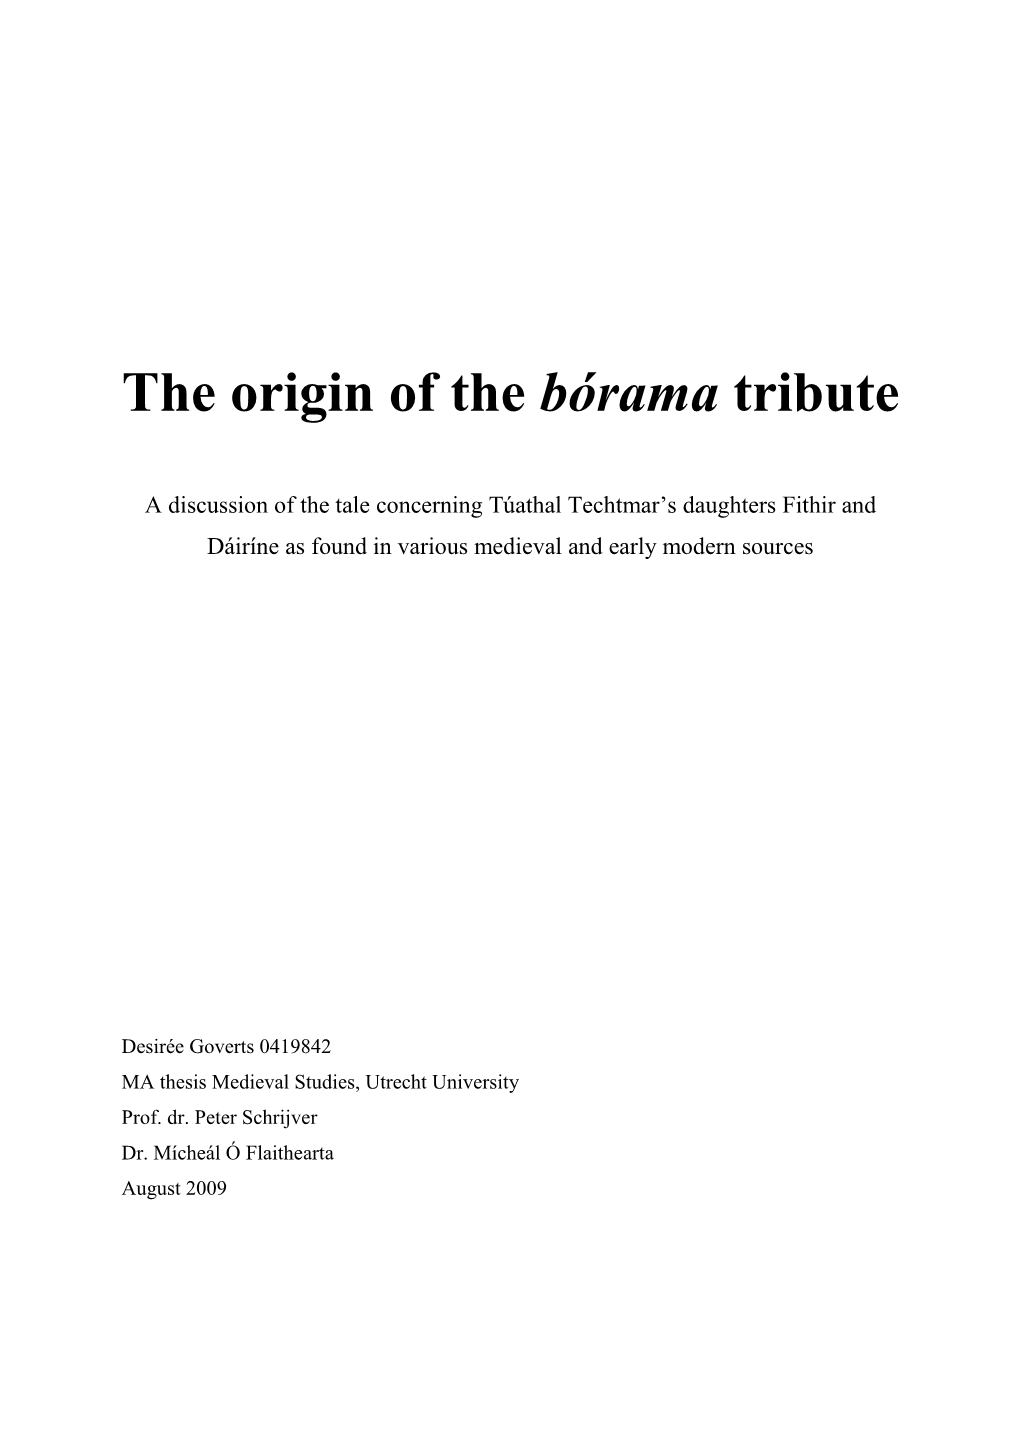 The Origin of the Bórama Tribute